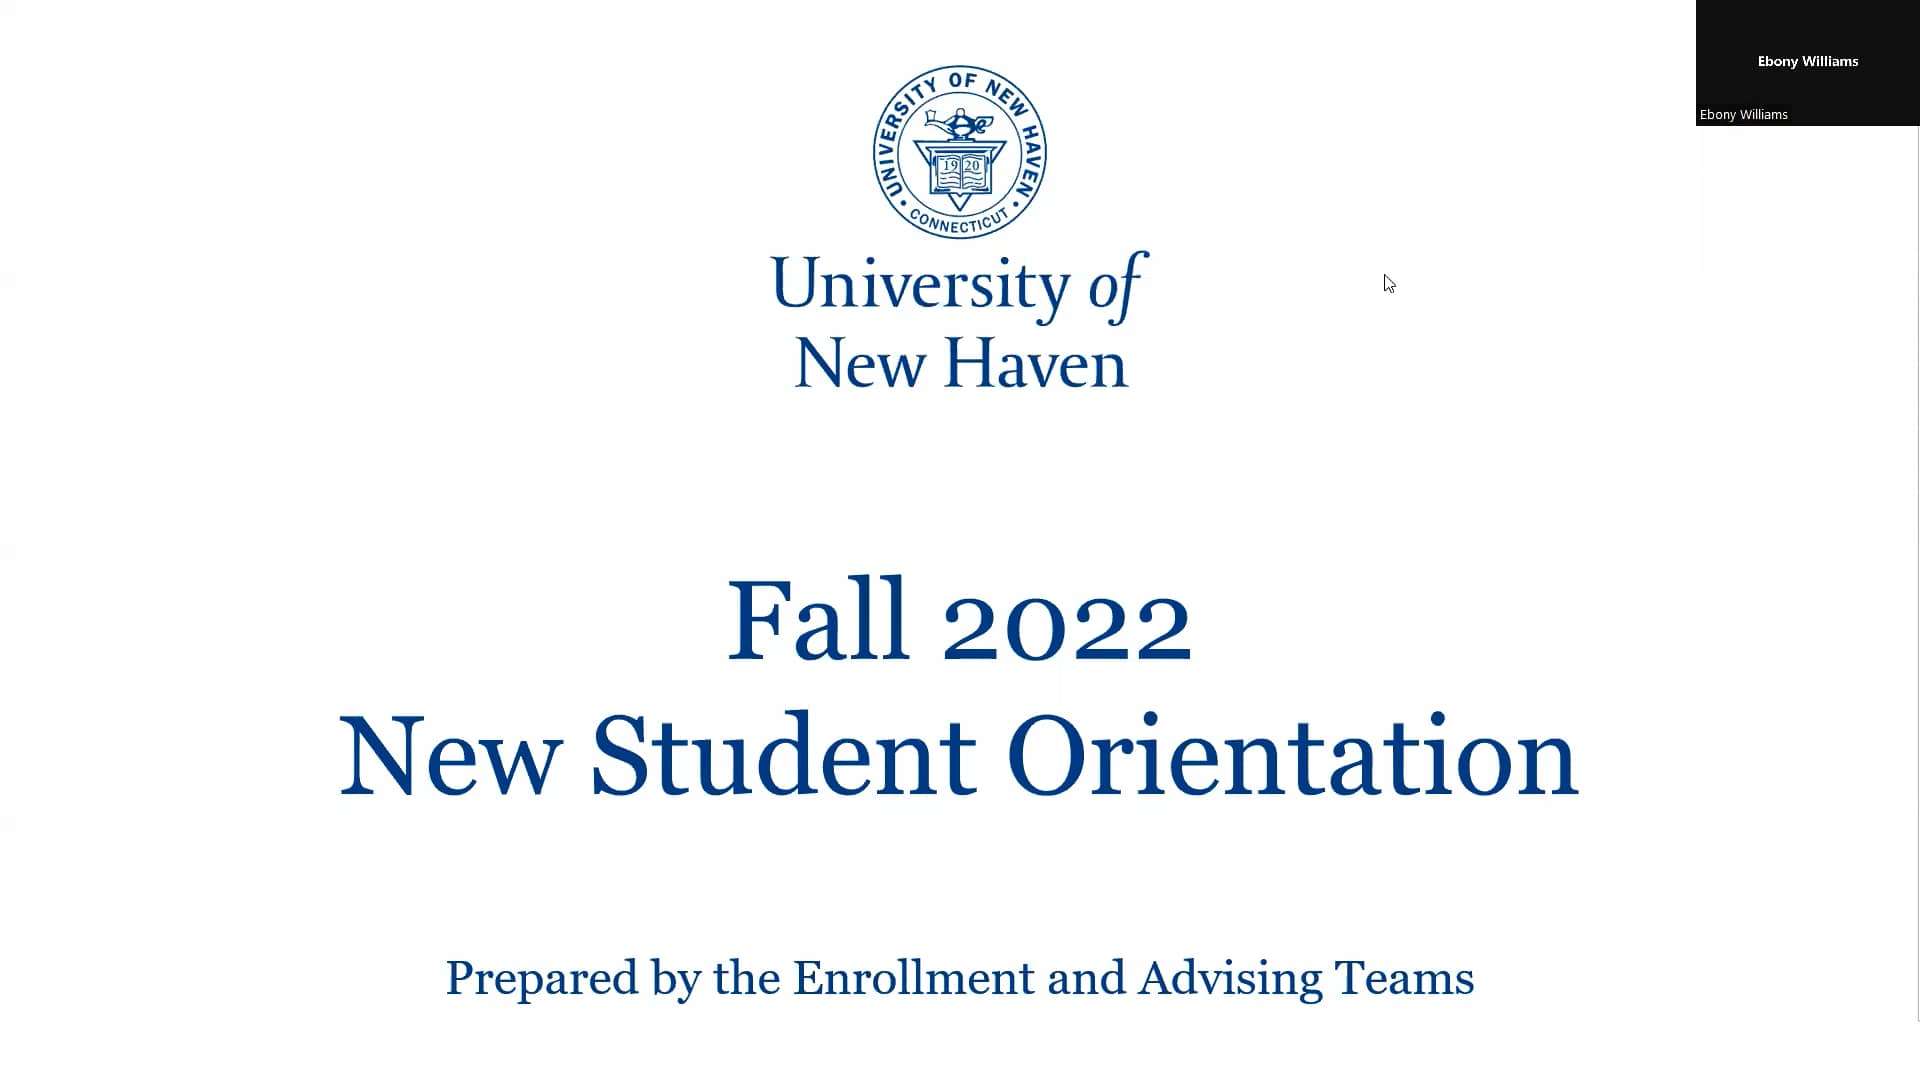 University of New Haven New Student Orientation Fall 2022 on Vimeo